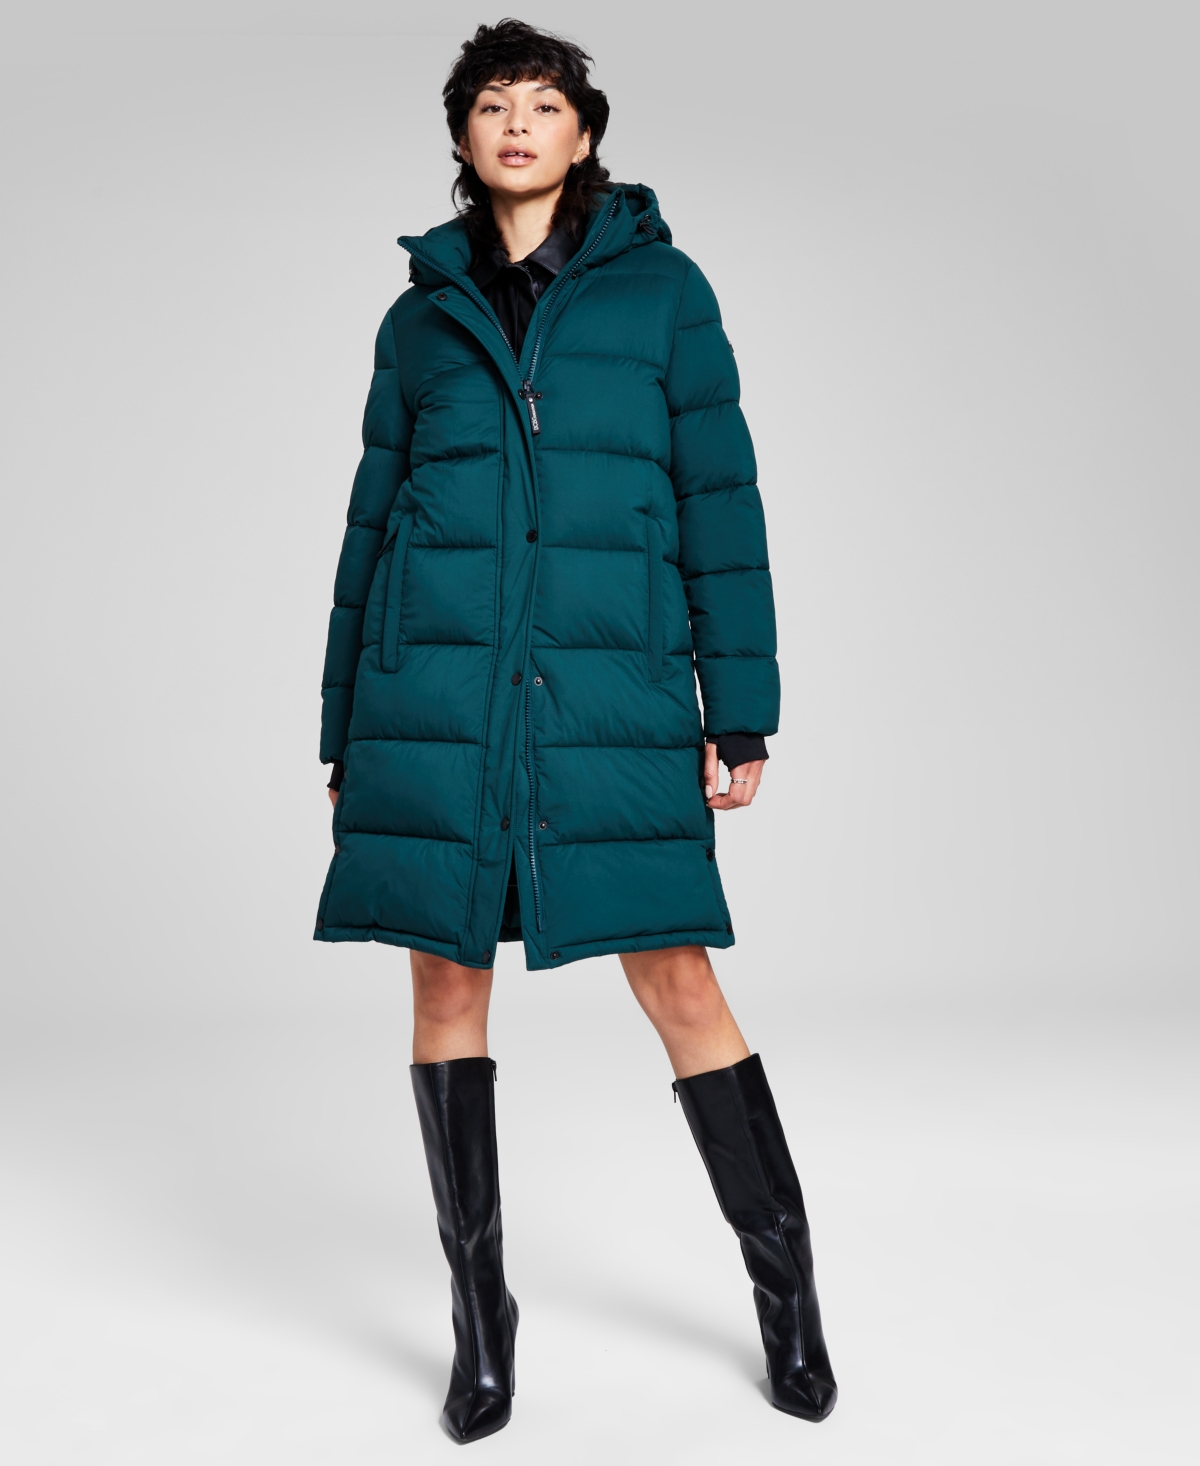 Women's Petite Hooded Puffer Coat, Created for Macy's - Emerald